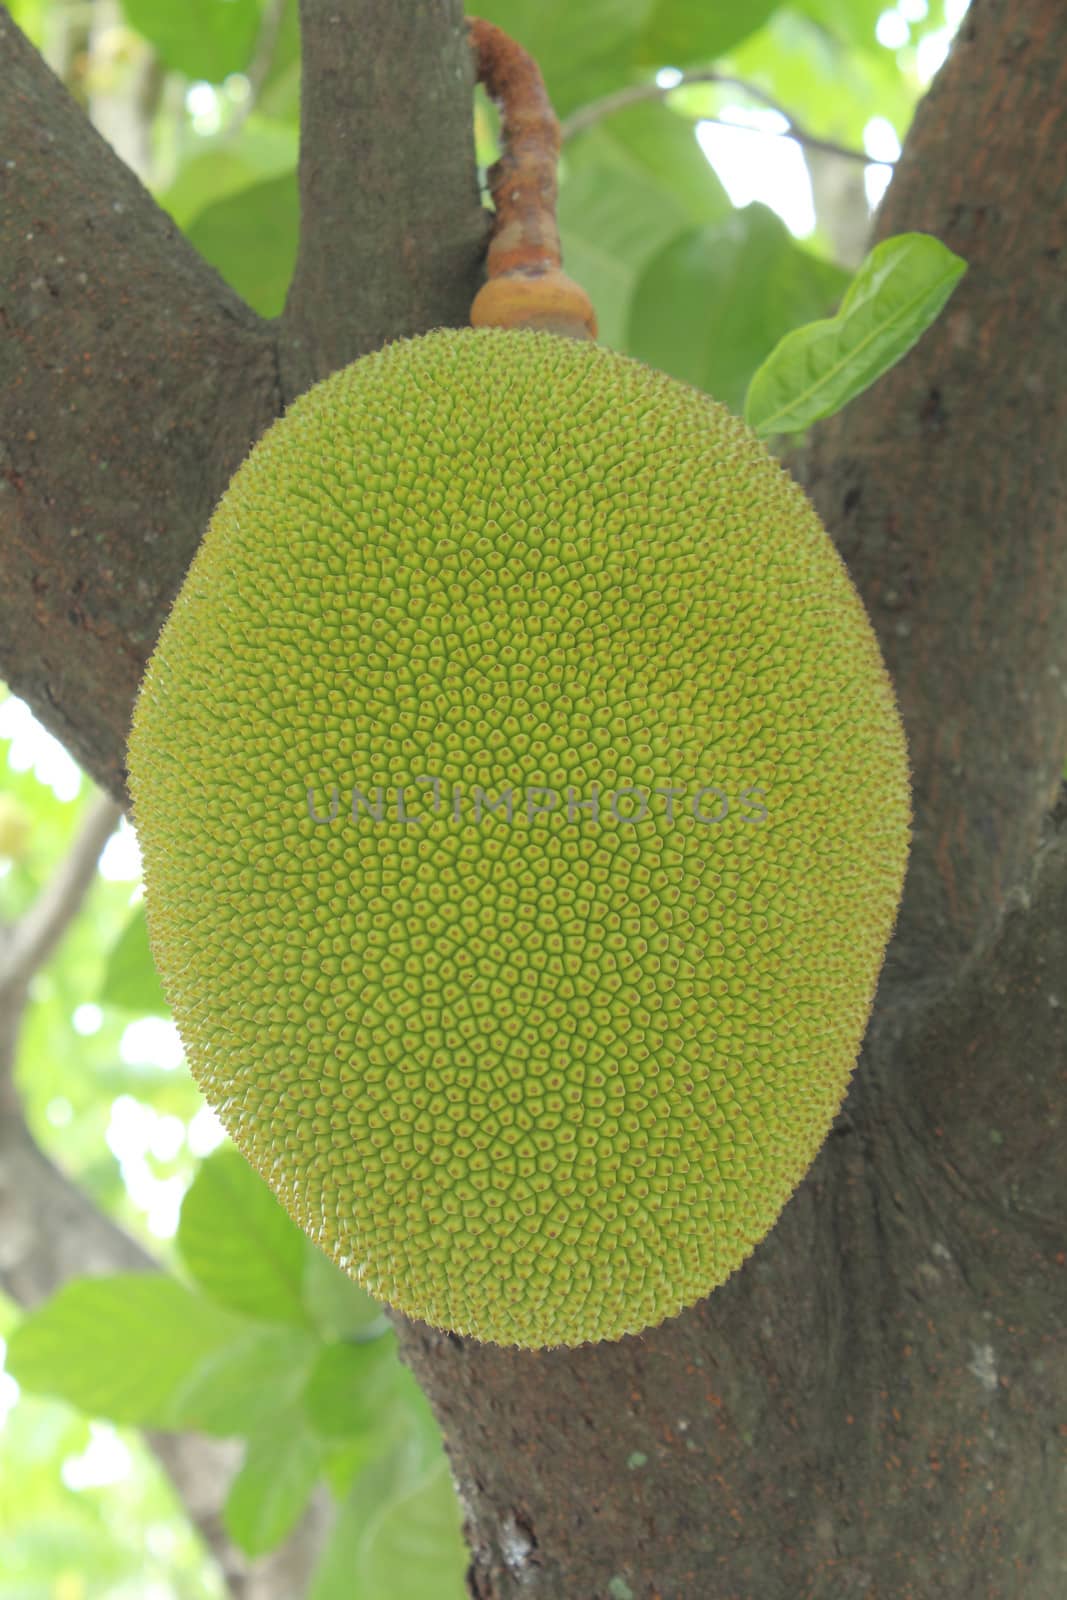 Jackfruit (Artocarpus heterophyllus) on the tree, an exotic fruit from the mulberry family